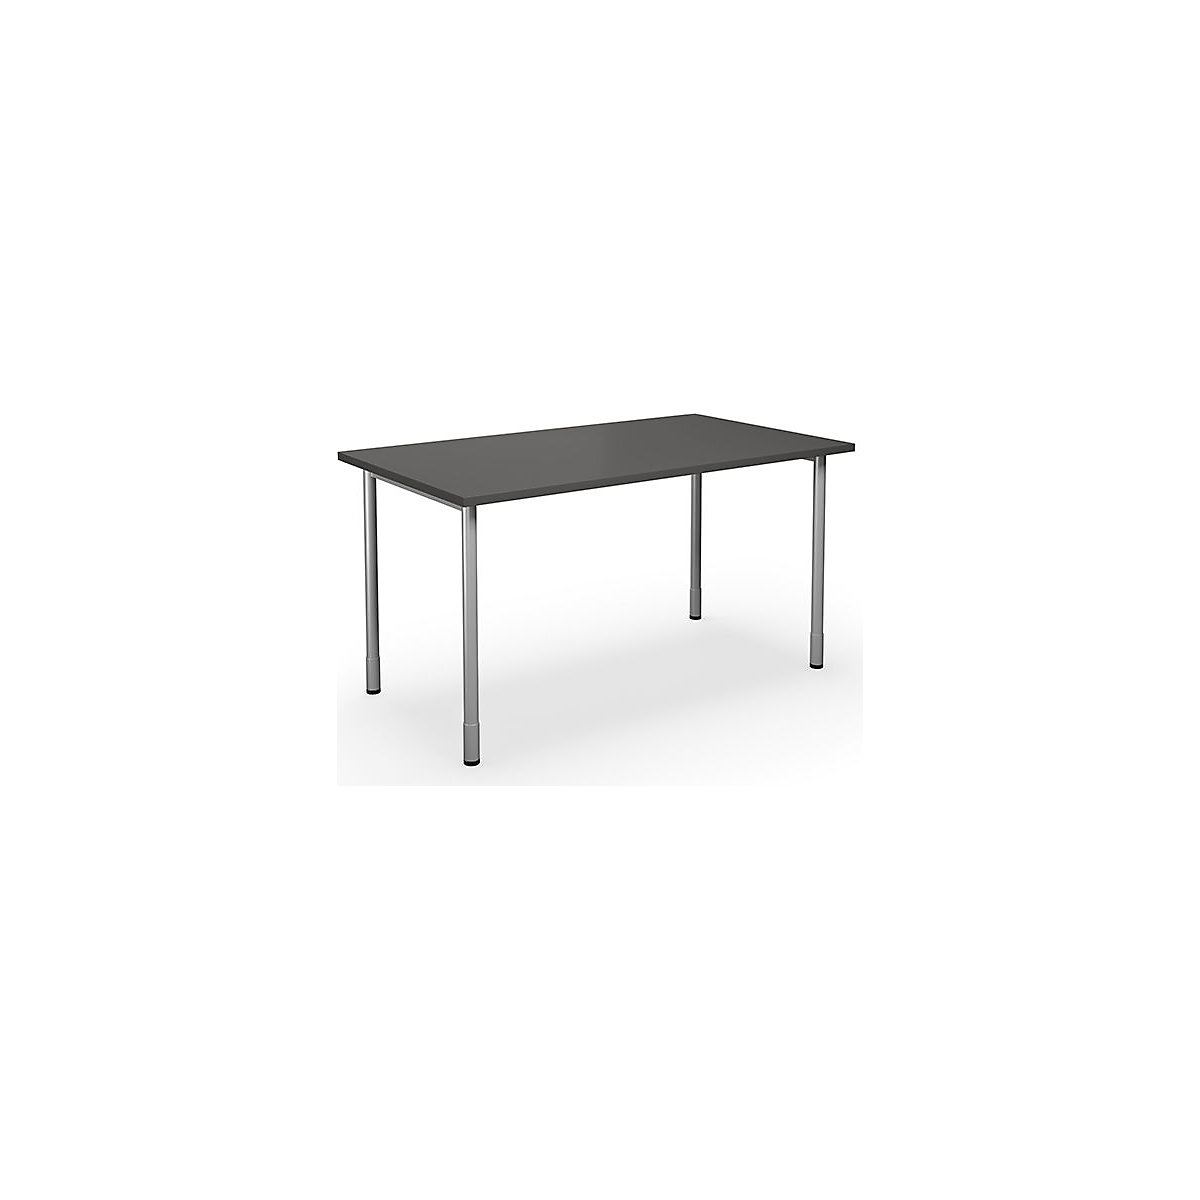 DUO-C multi-purpose desk, straight tabletop, WxD 1400 x 800 mm, dark grey, silver-5